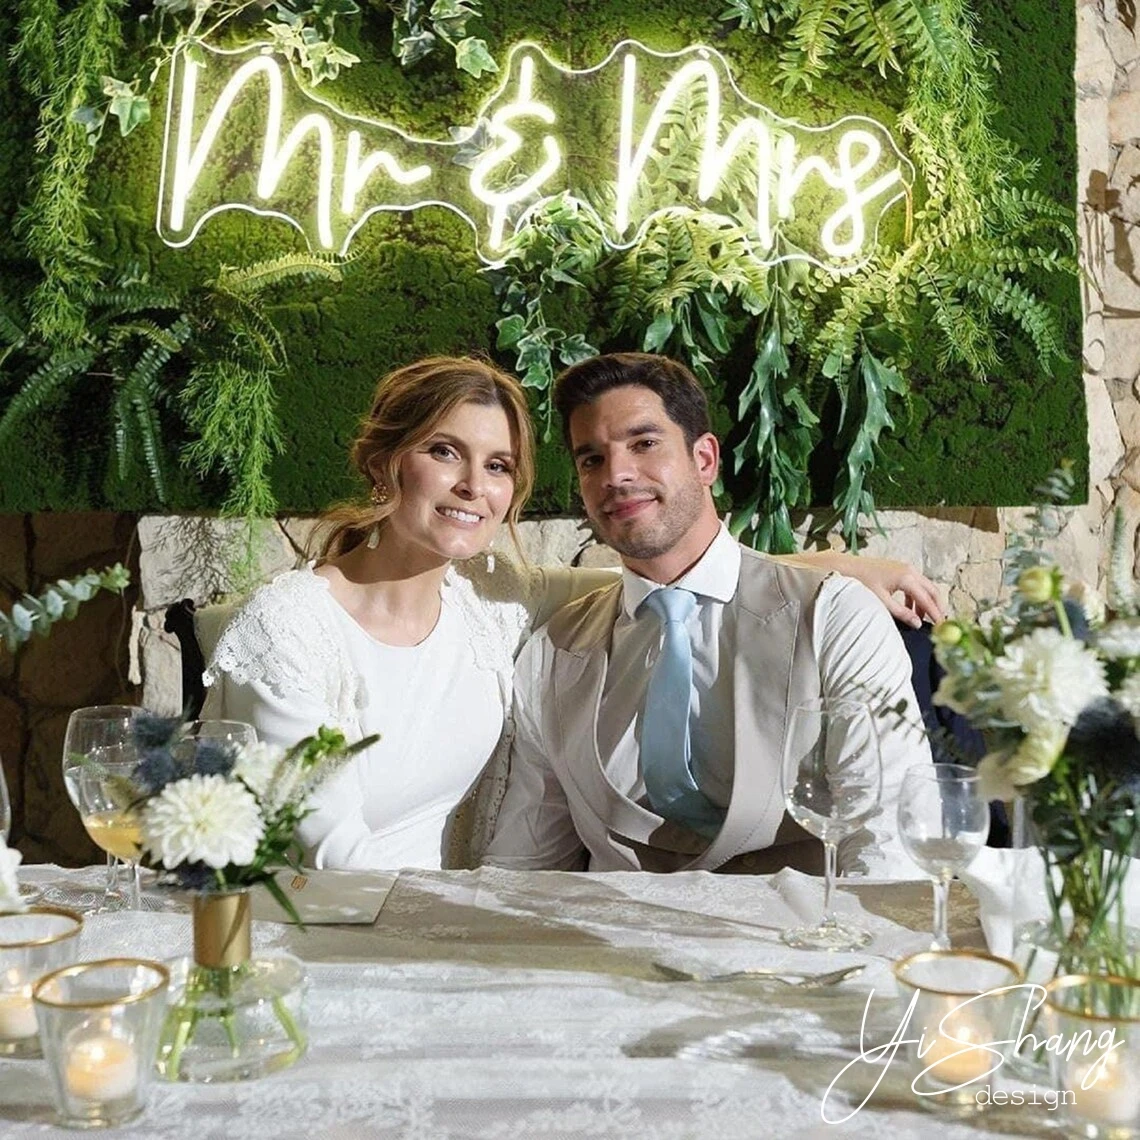 Initials Custom , Mr & Mrs Wedding Neon Sign | Wedding neon sign, Wedding neon Sign, Custom Neon Signs, LED Neon Sign, LED Neon.